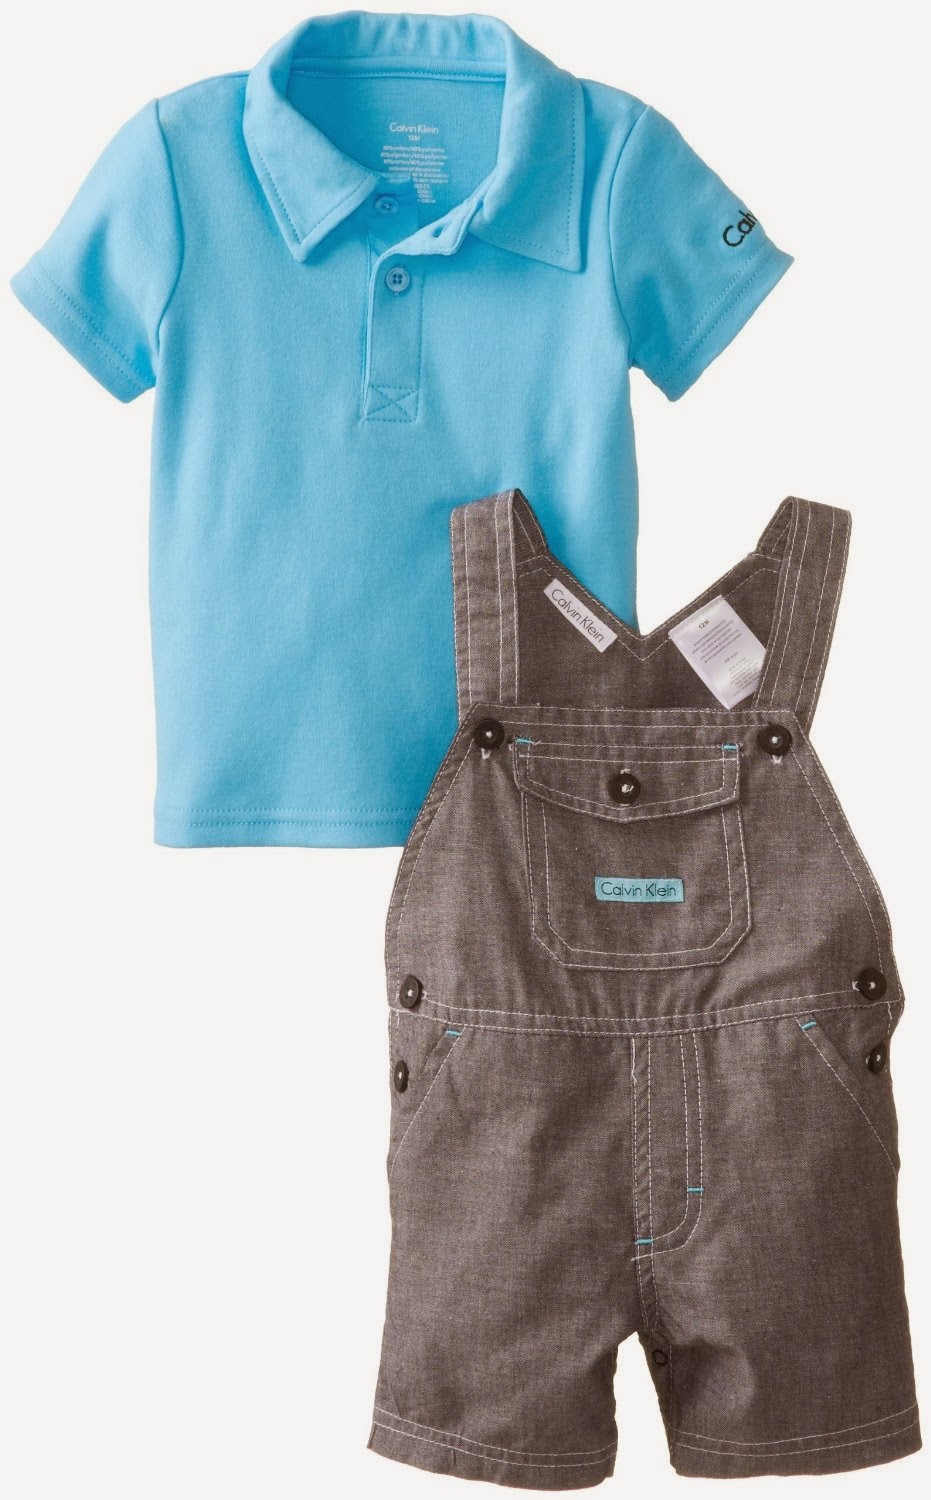 Rays Little Baju  Bayi Bermerek Calvin Klein Untuk Bayi Laki  Laki  Anda